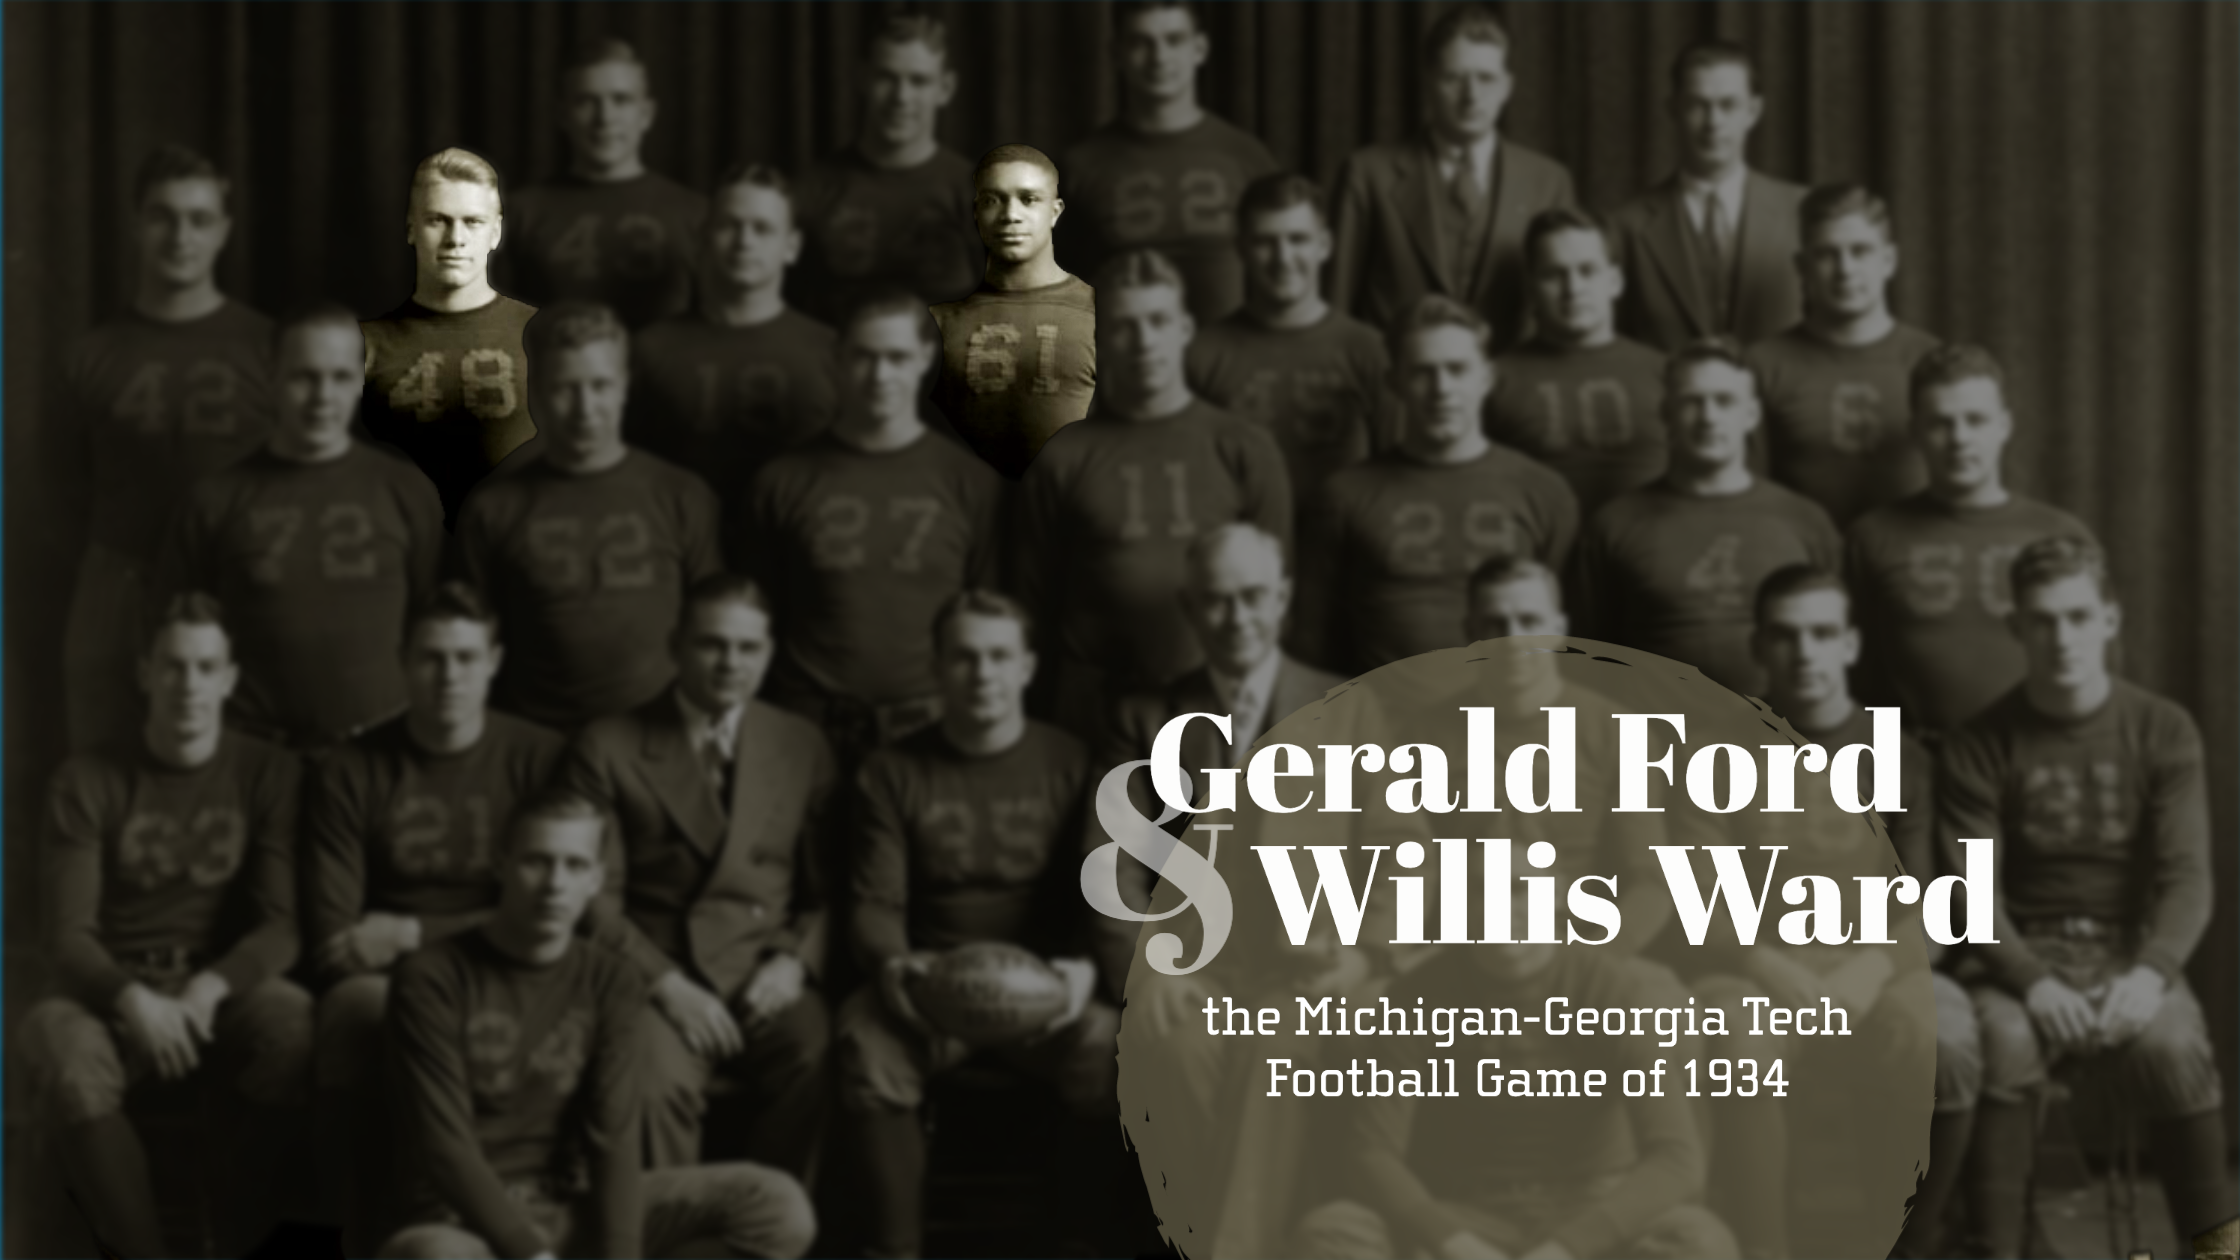 Gerald Ford, Willis Ward, & the Michigan-Georgia Tech Football Game of 1934